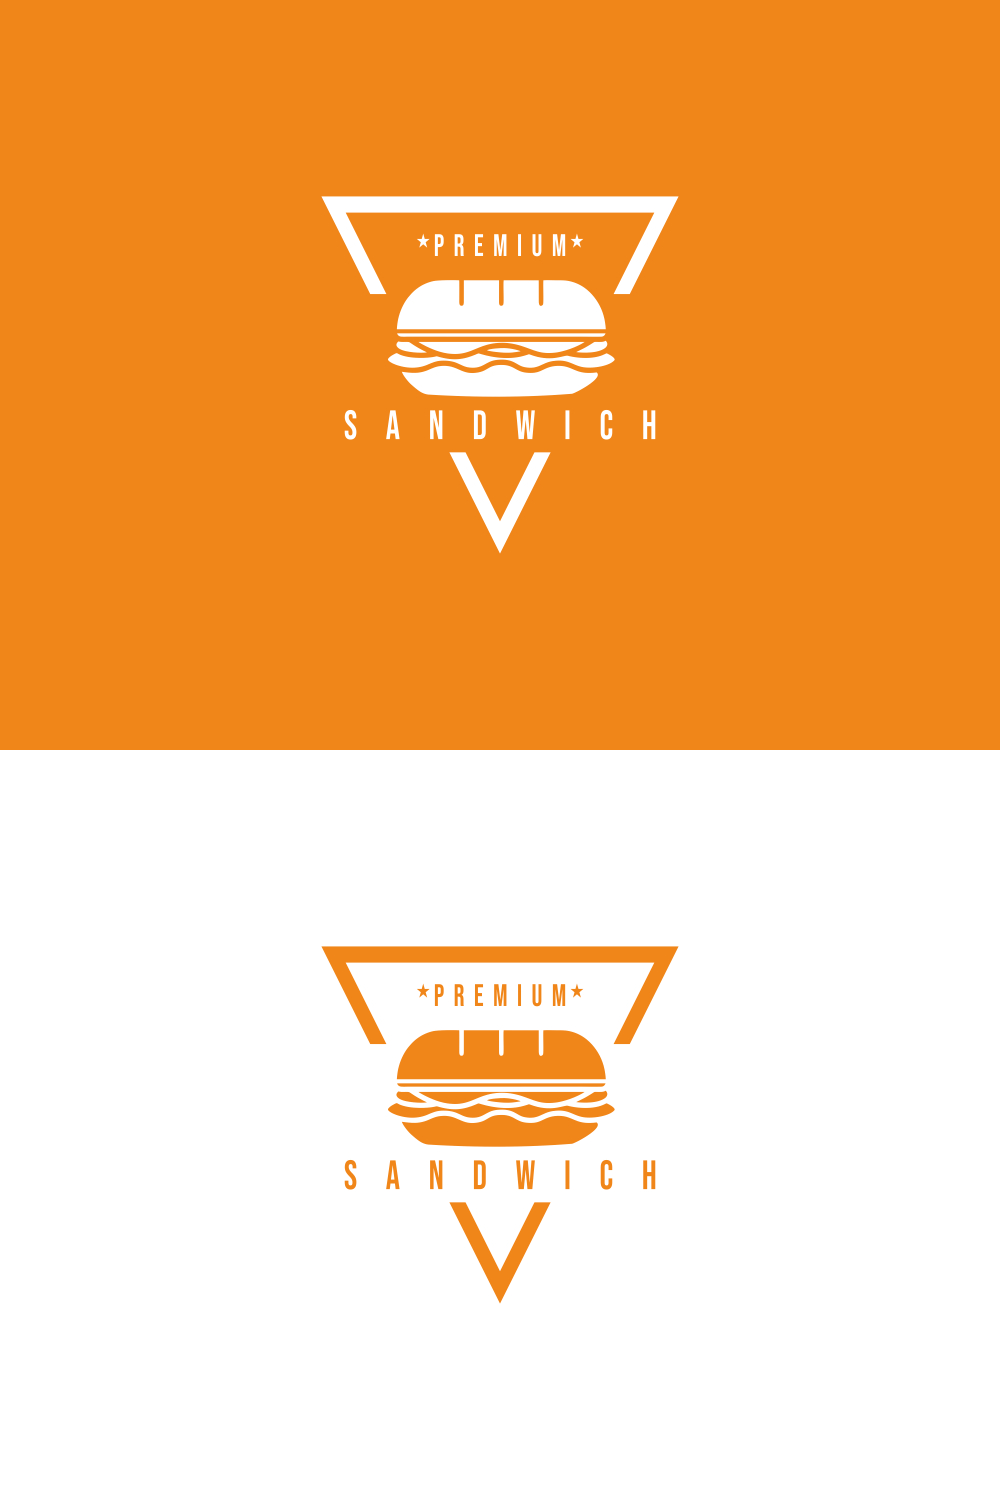 sub submarine sandwich logo icon in light orange color style pinterest preview image.